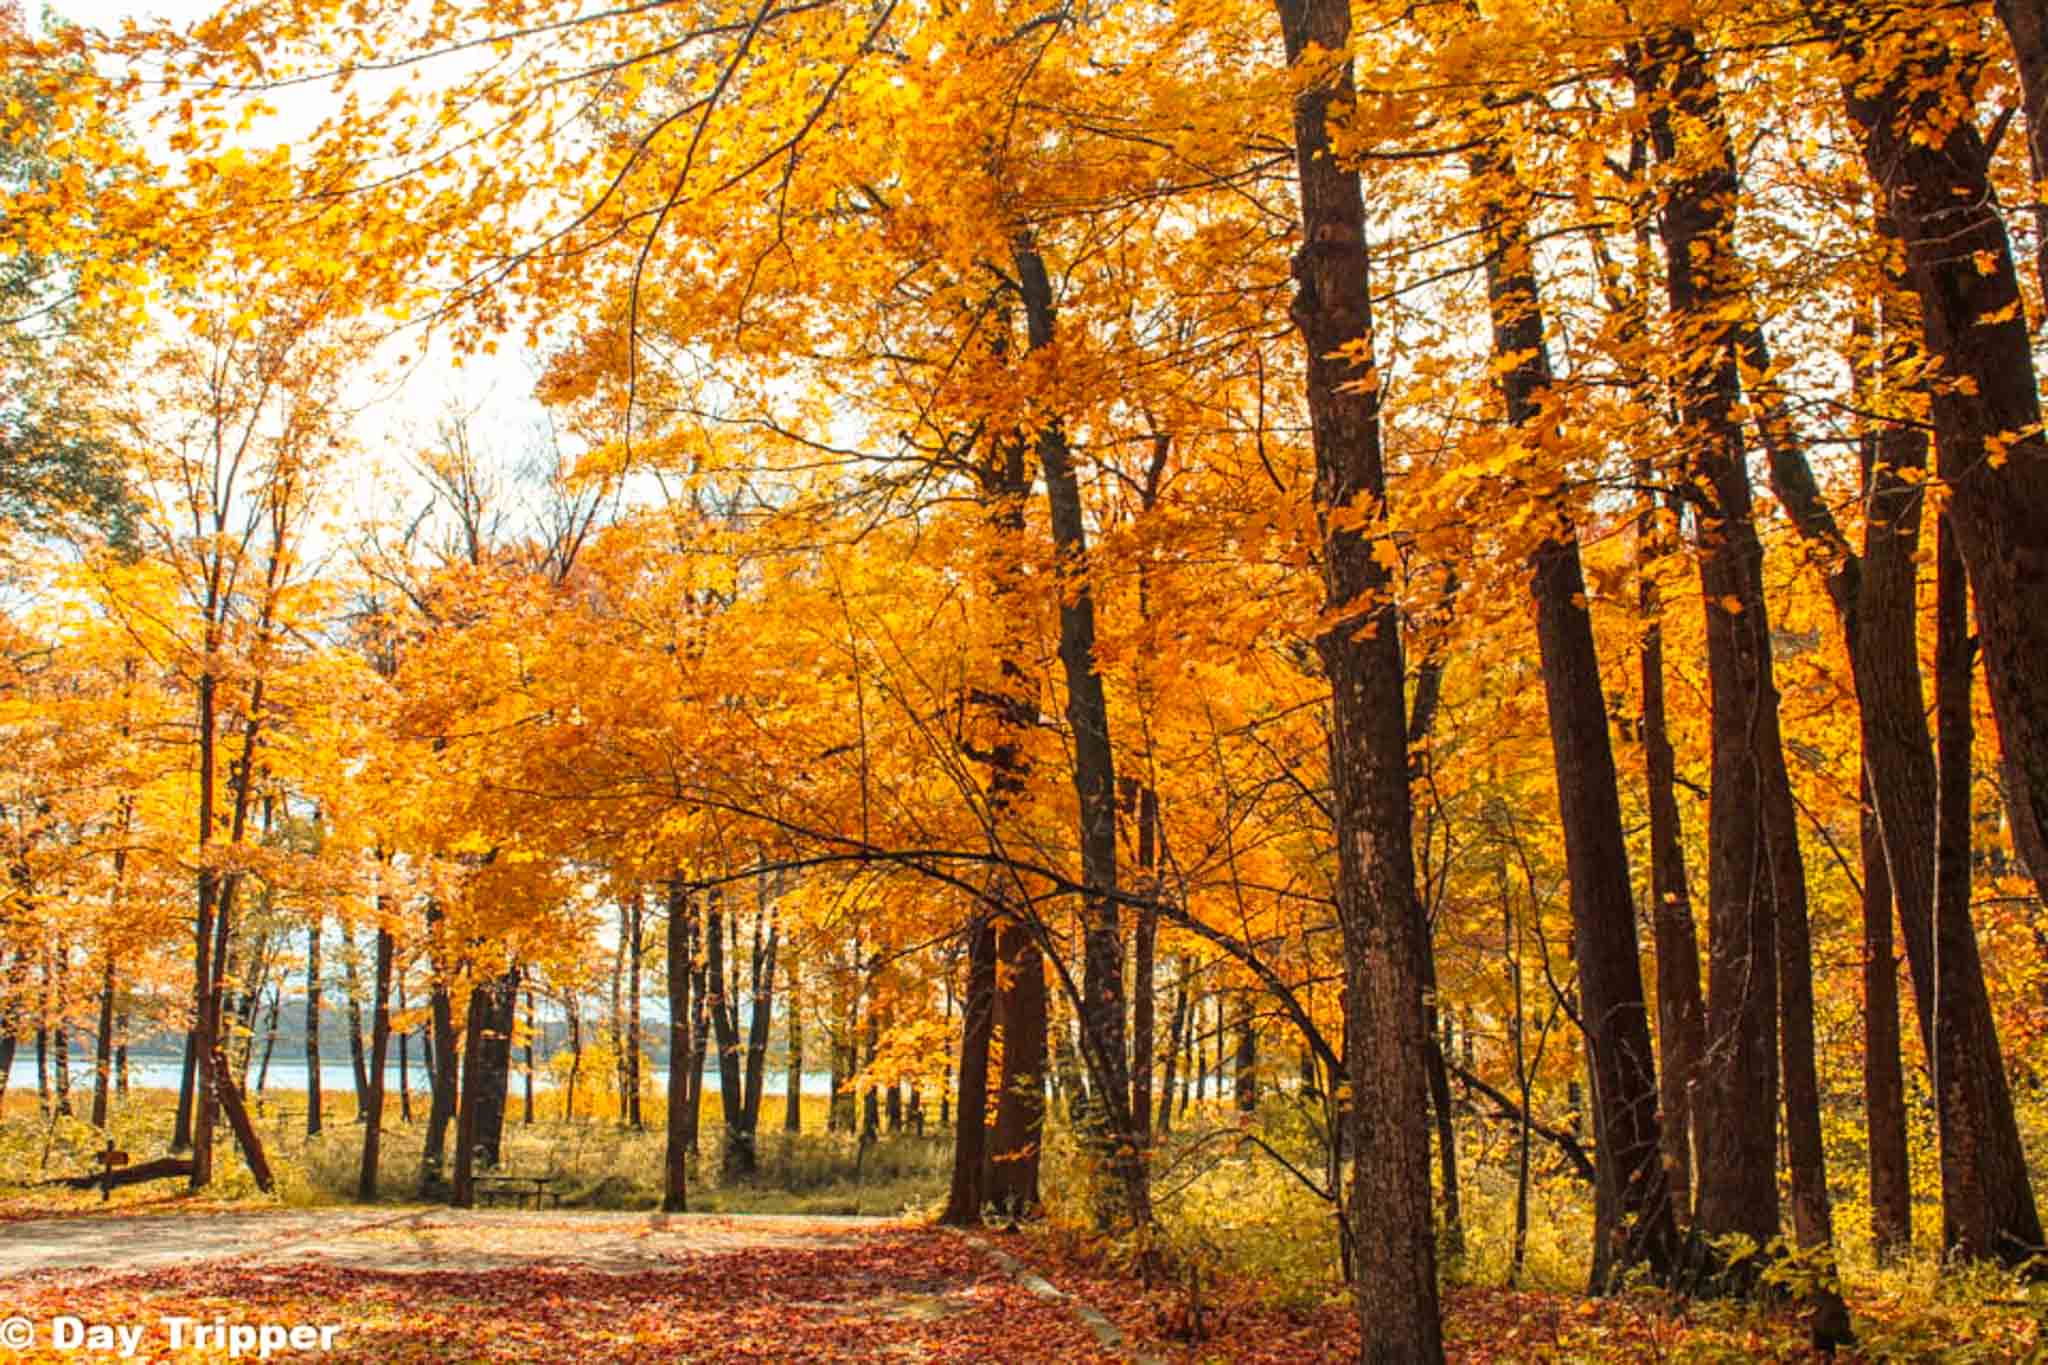 Minnesota's Fall Colors at Rice Lake State Park